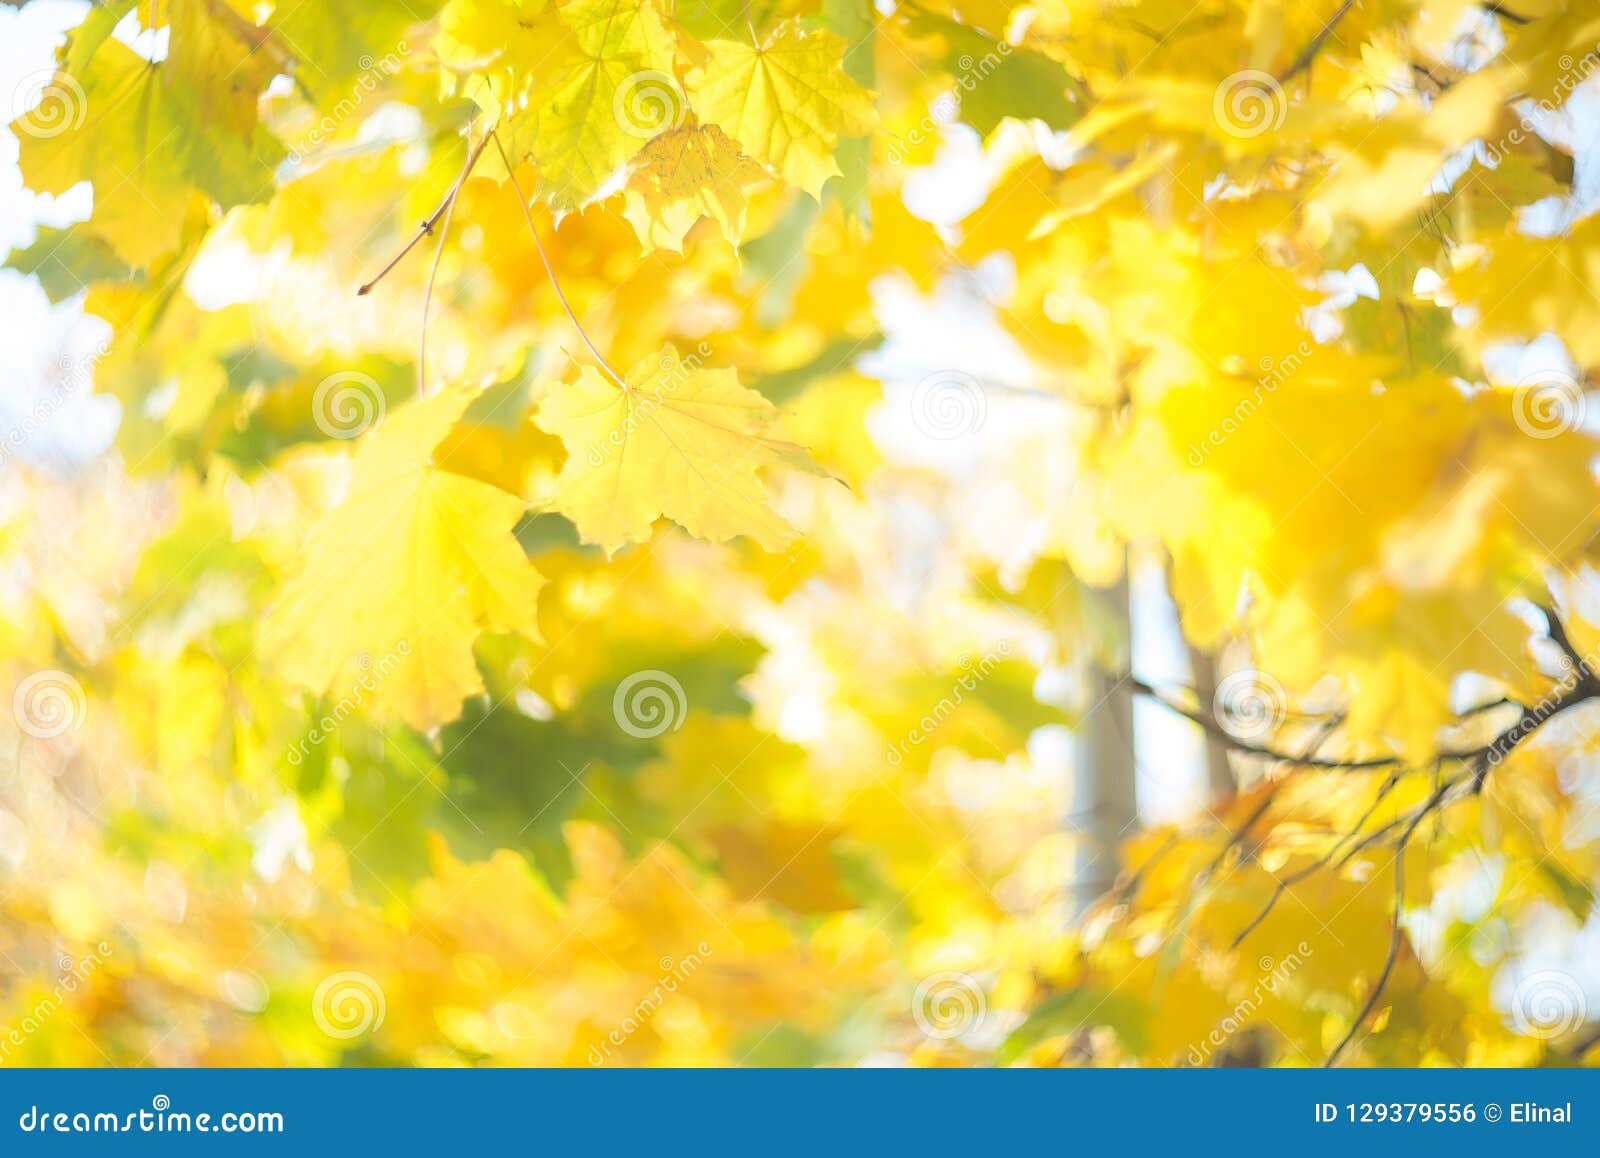 maples autumn golden fall background